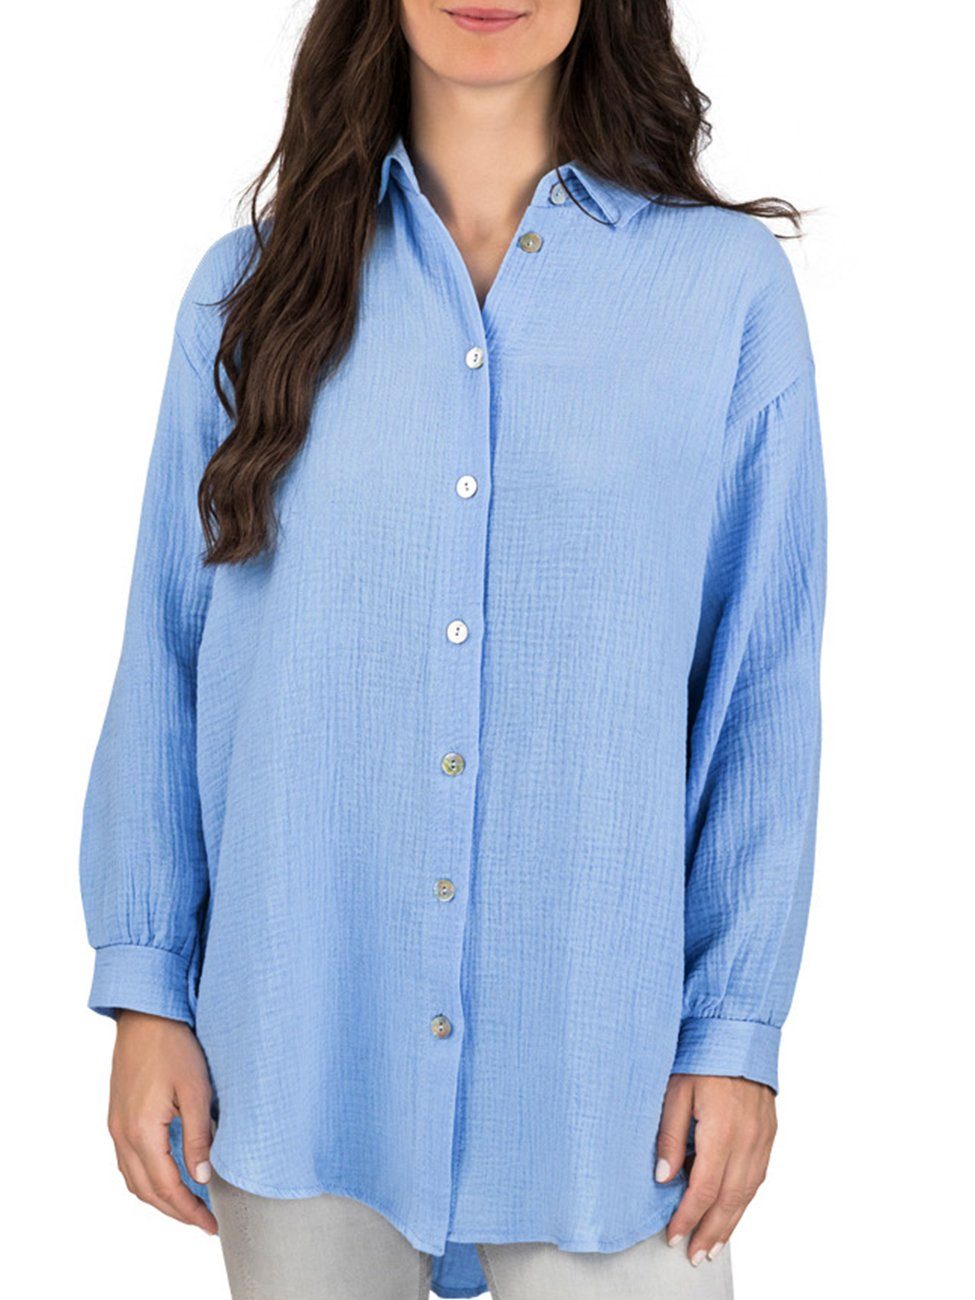 Fit Damen Hemd Basic Musselin DFMathilda Hemdbluse Bluse Oversize Baumwolle aus 100% DENIMFY